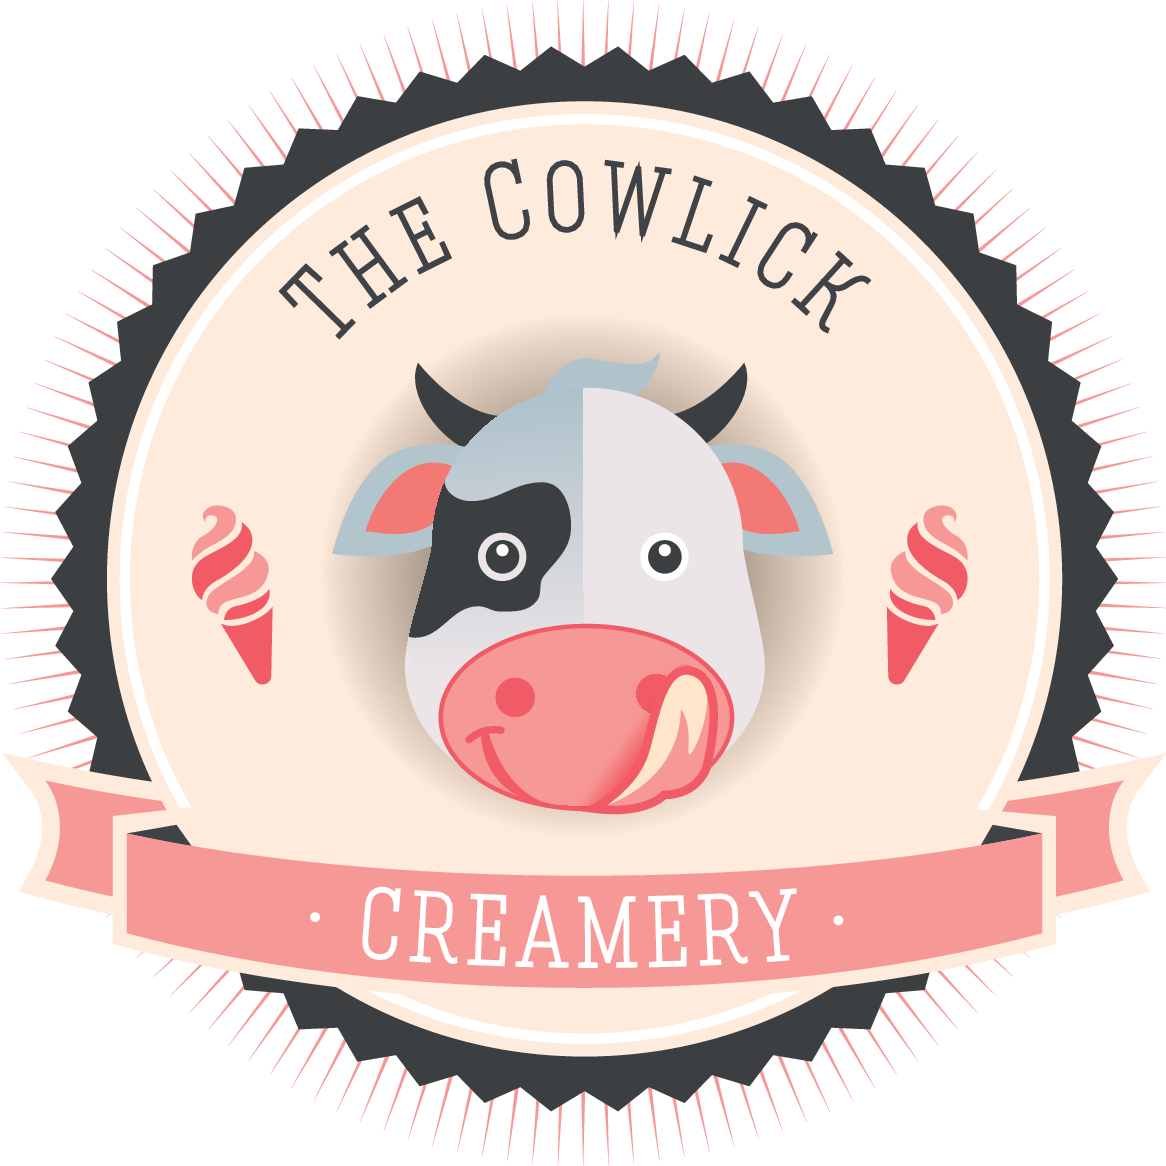 The Cowlick Creamery